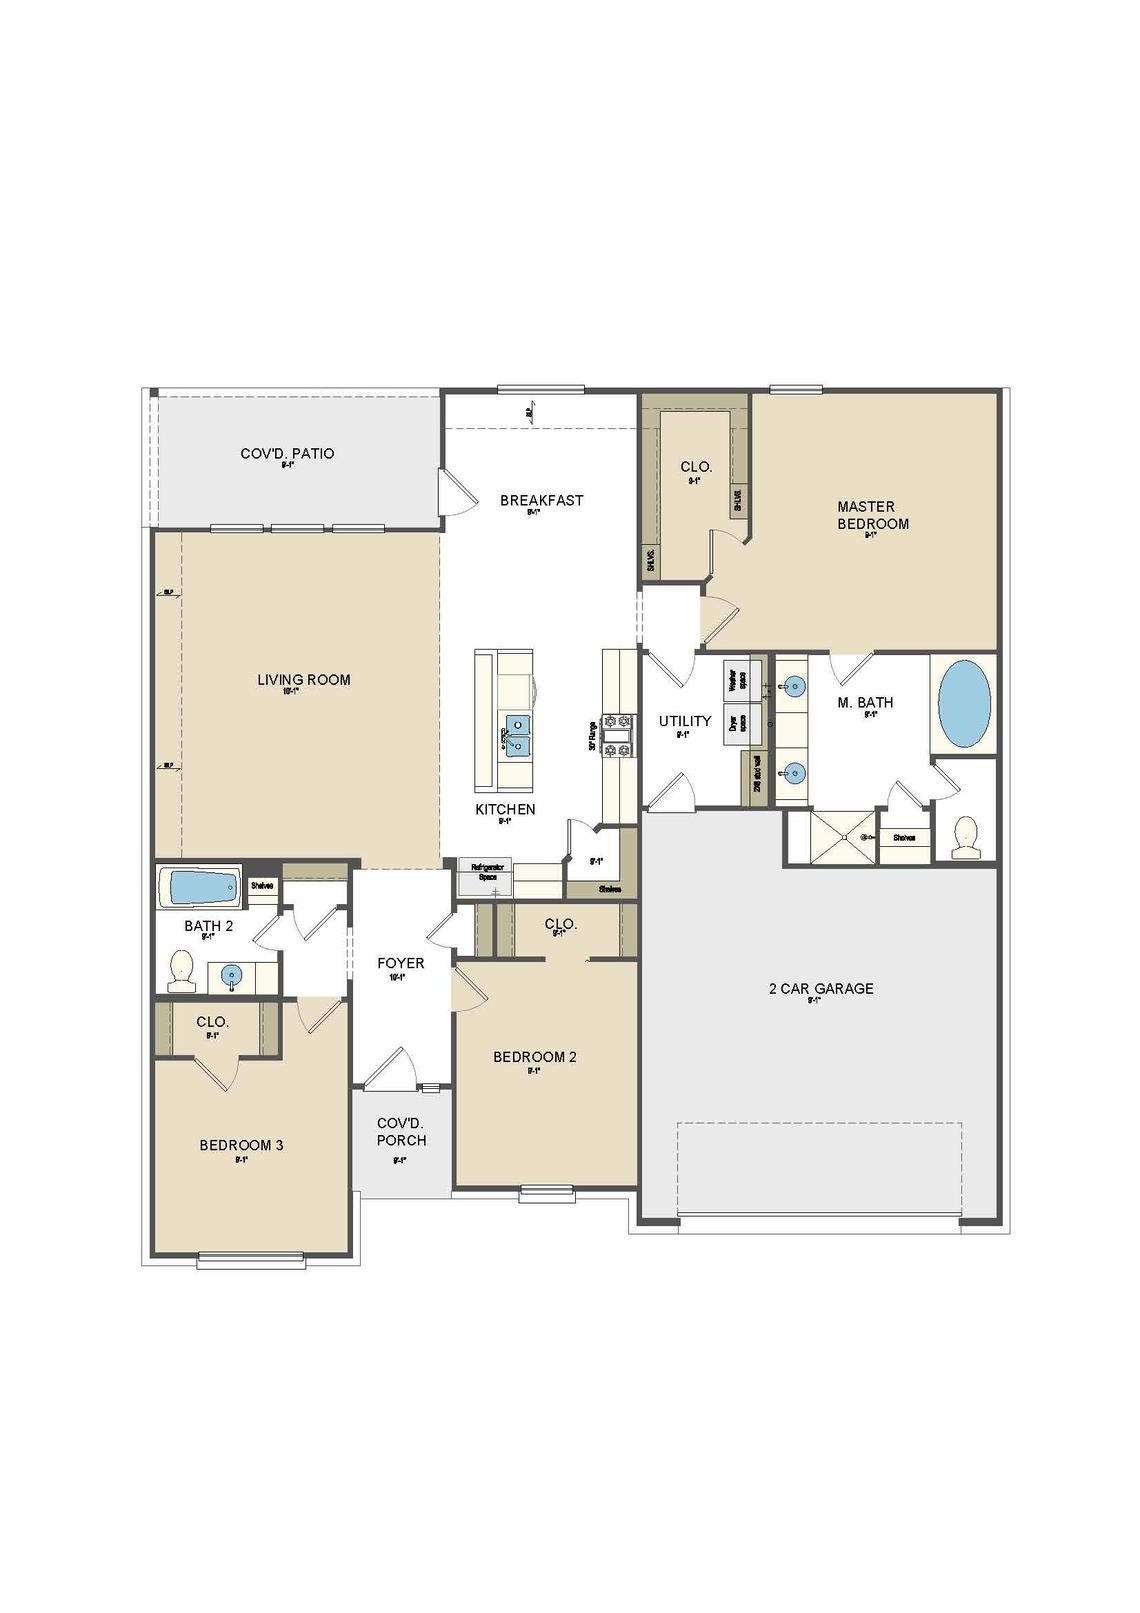 New home floor plan 1731 sq ft texas